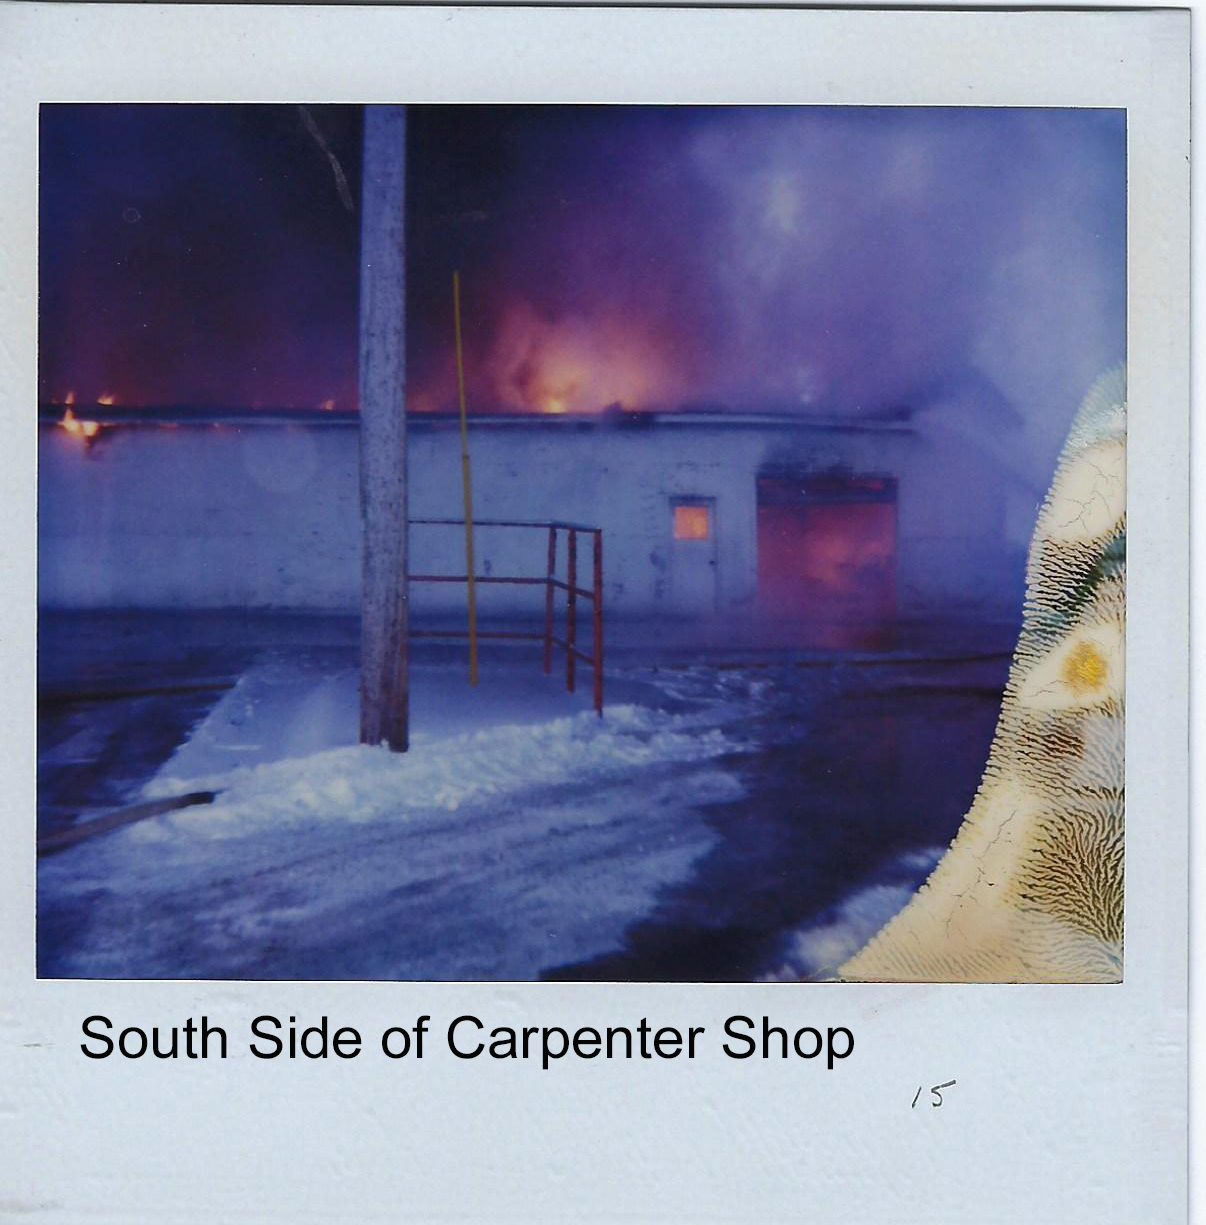 South side of Carpenter Shop